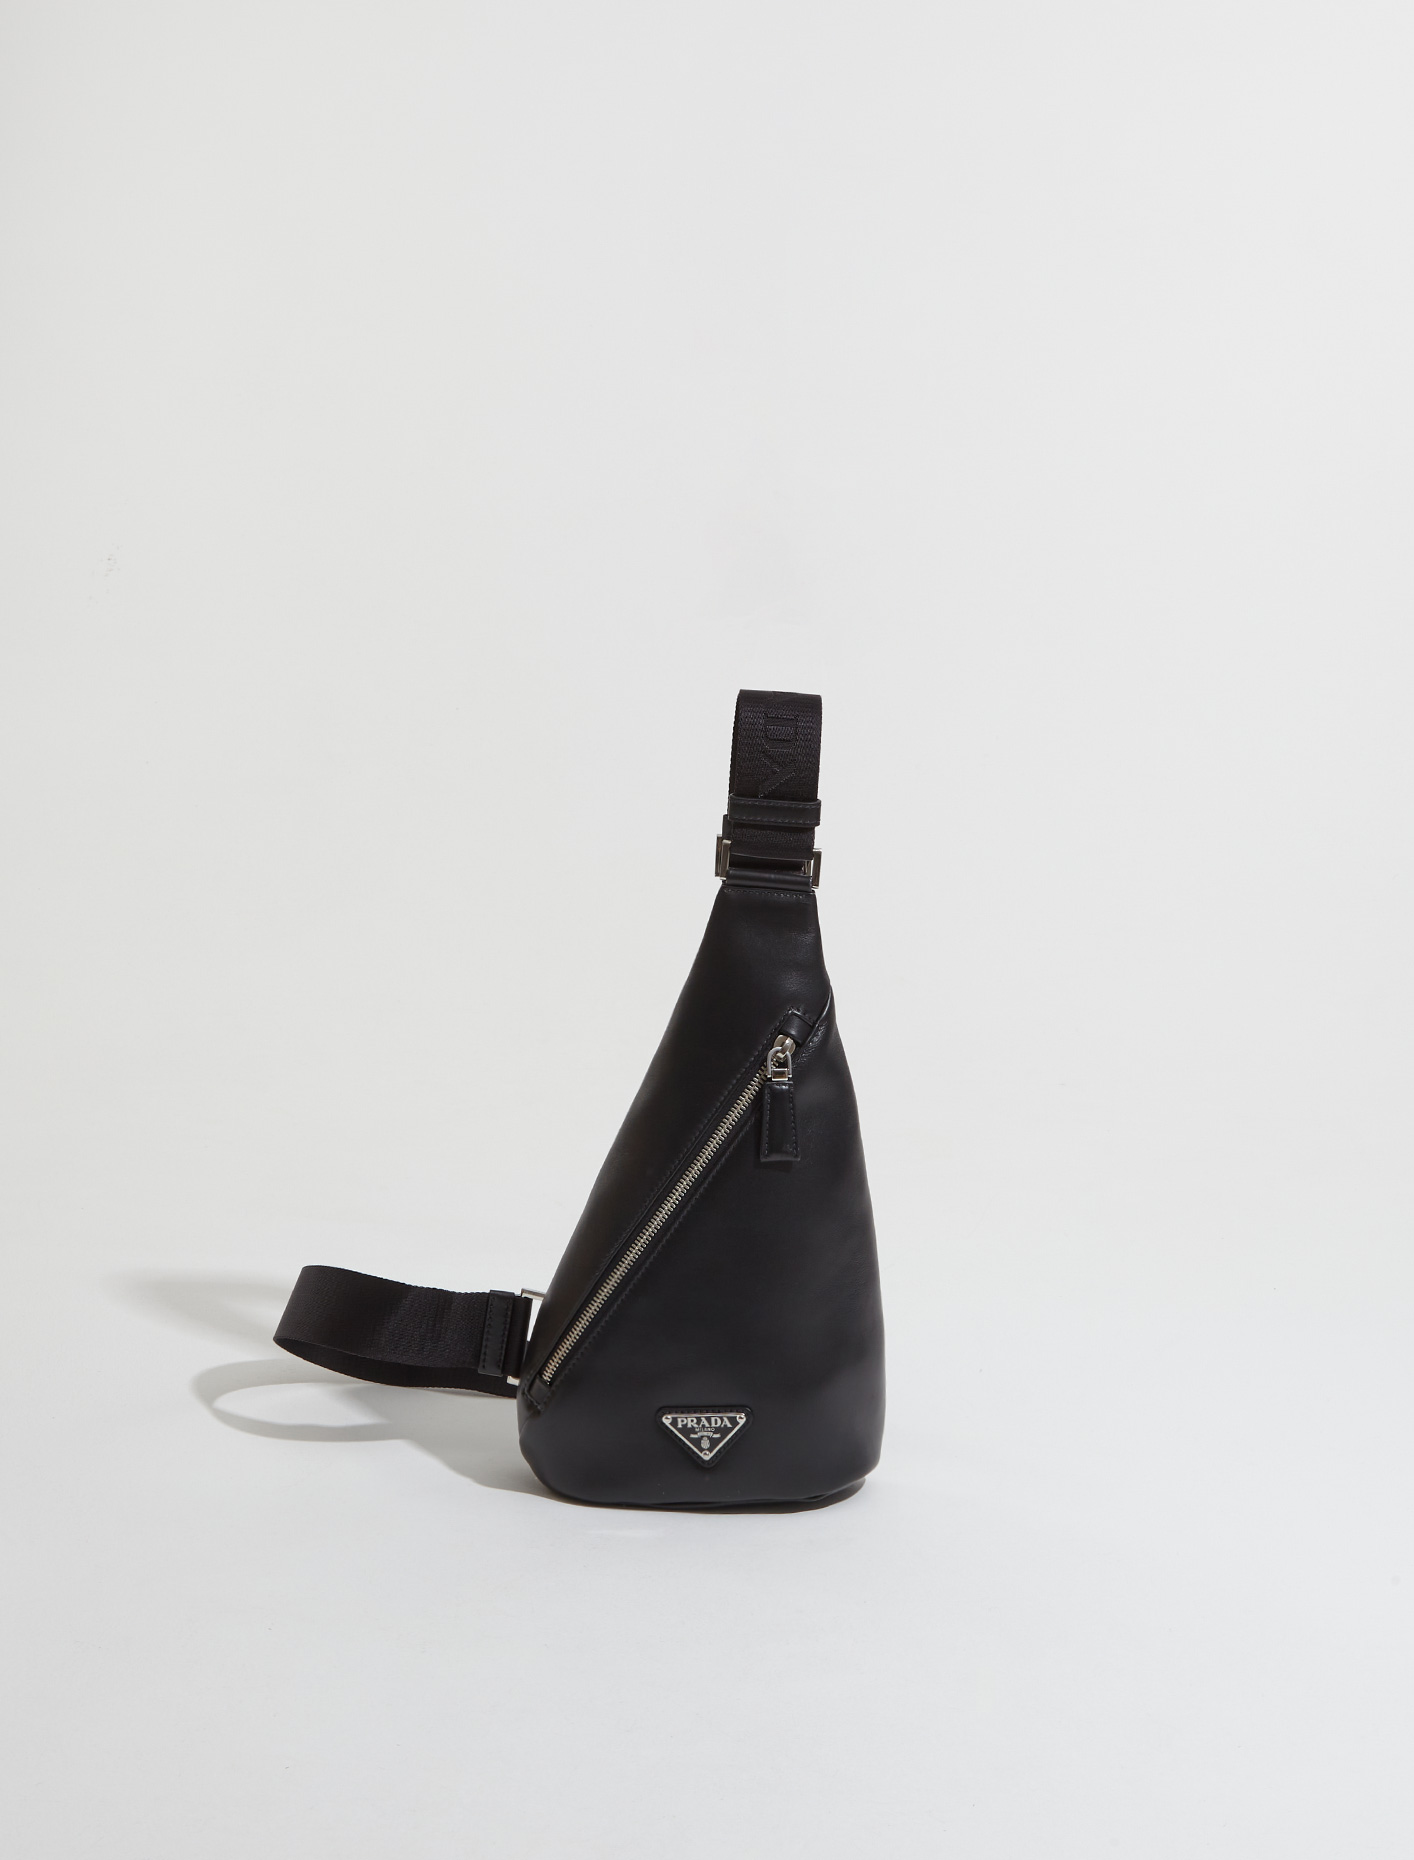 Prada Cross Leather Bag in Black | Voo Store Berlin | Worldwide Shipping